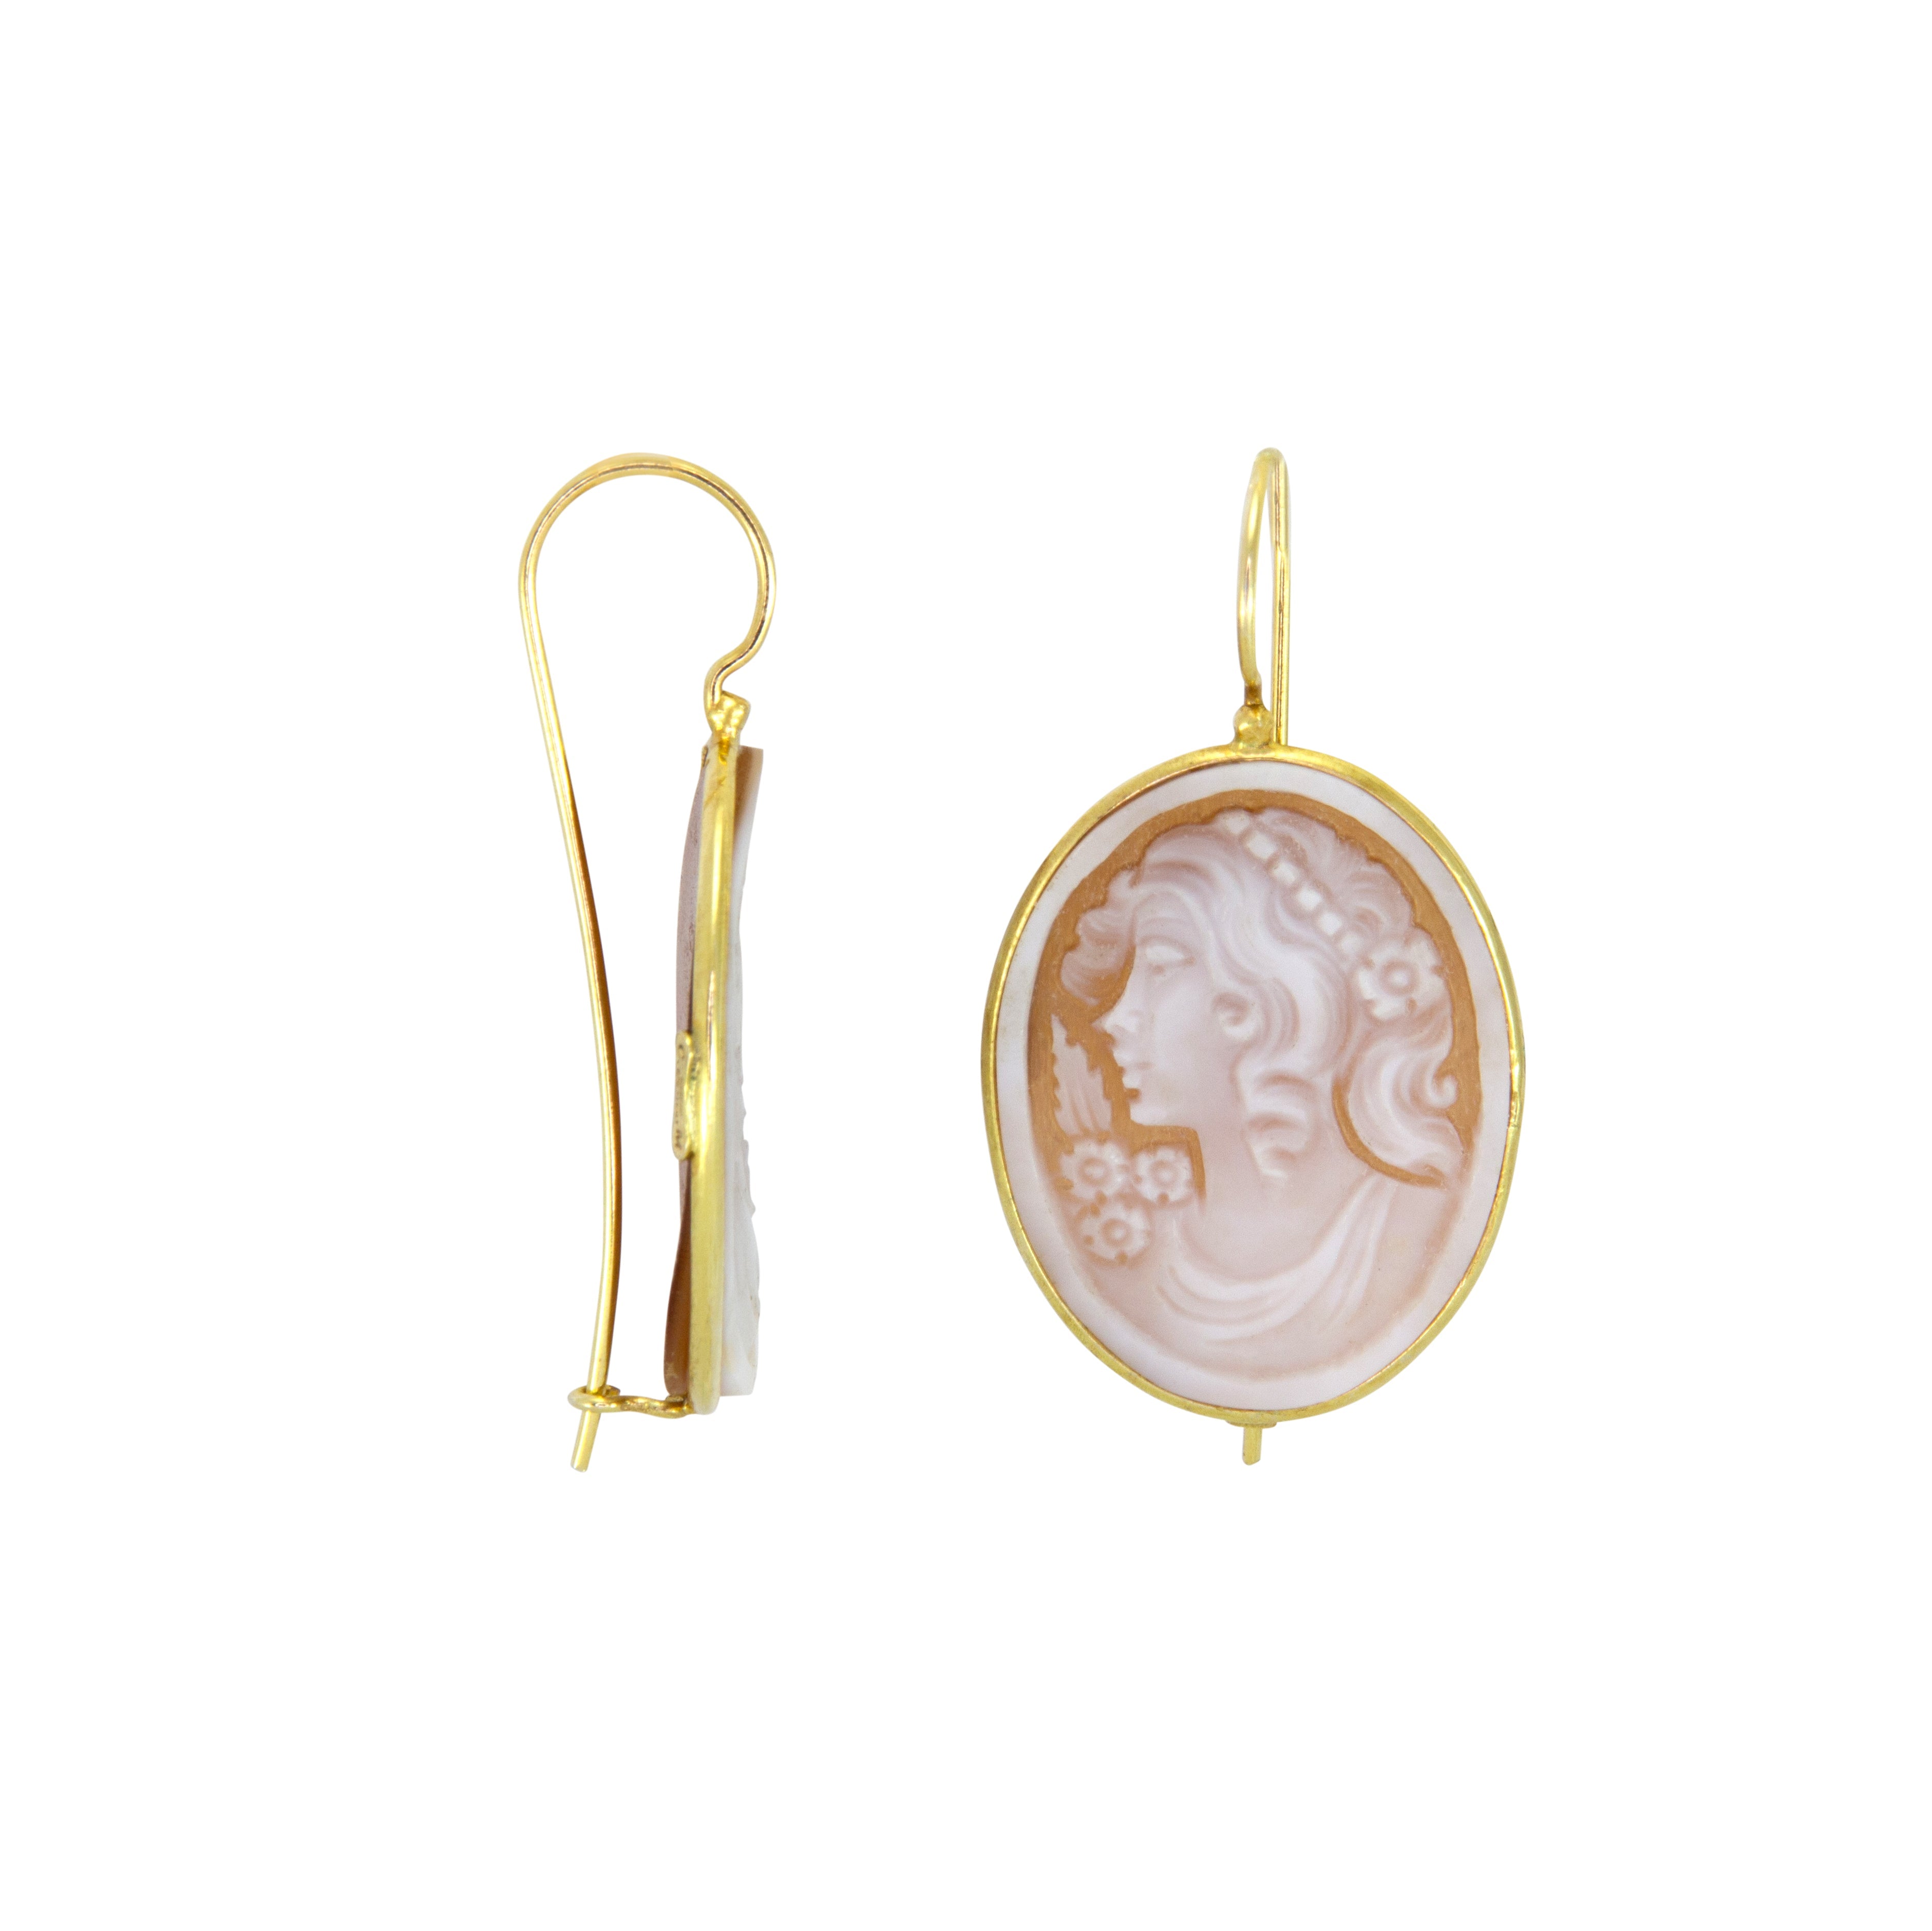 Medium Oval Cameo Head Earrings - Yellow Gold